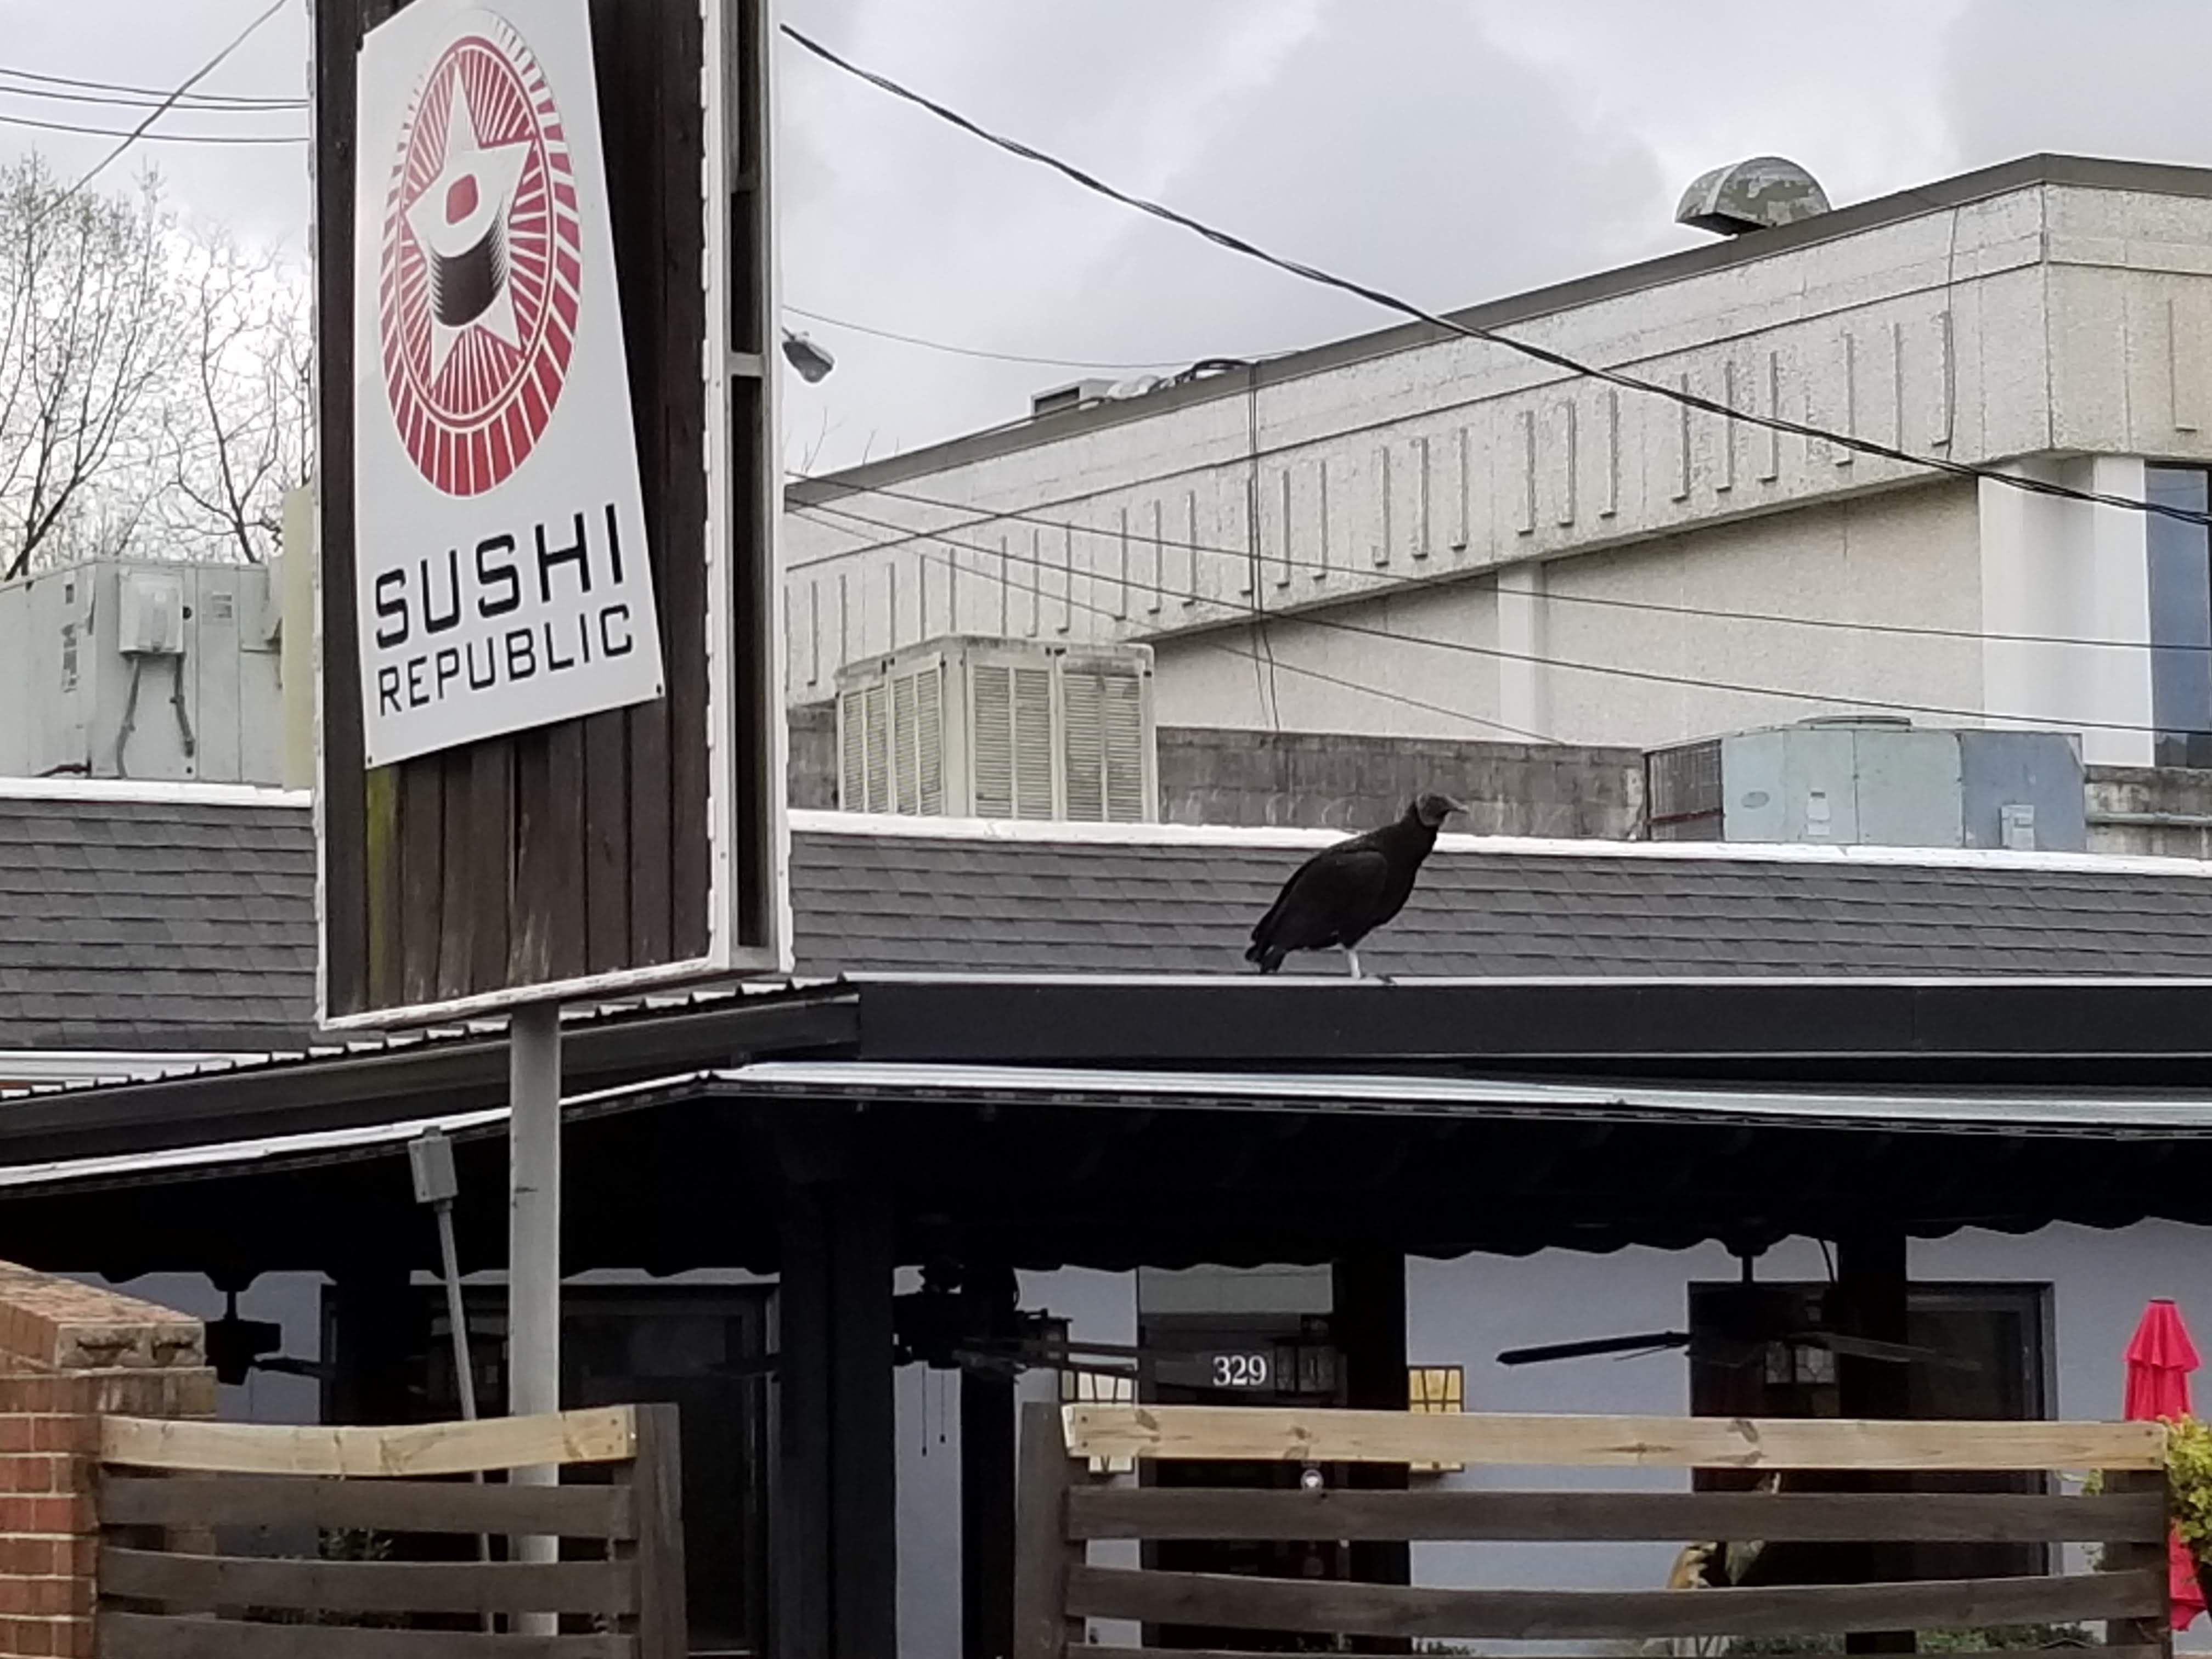 a vulture sits atop Sushi Republic